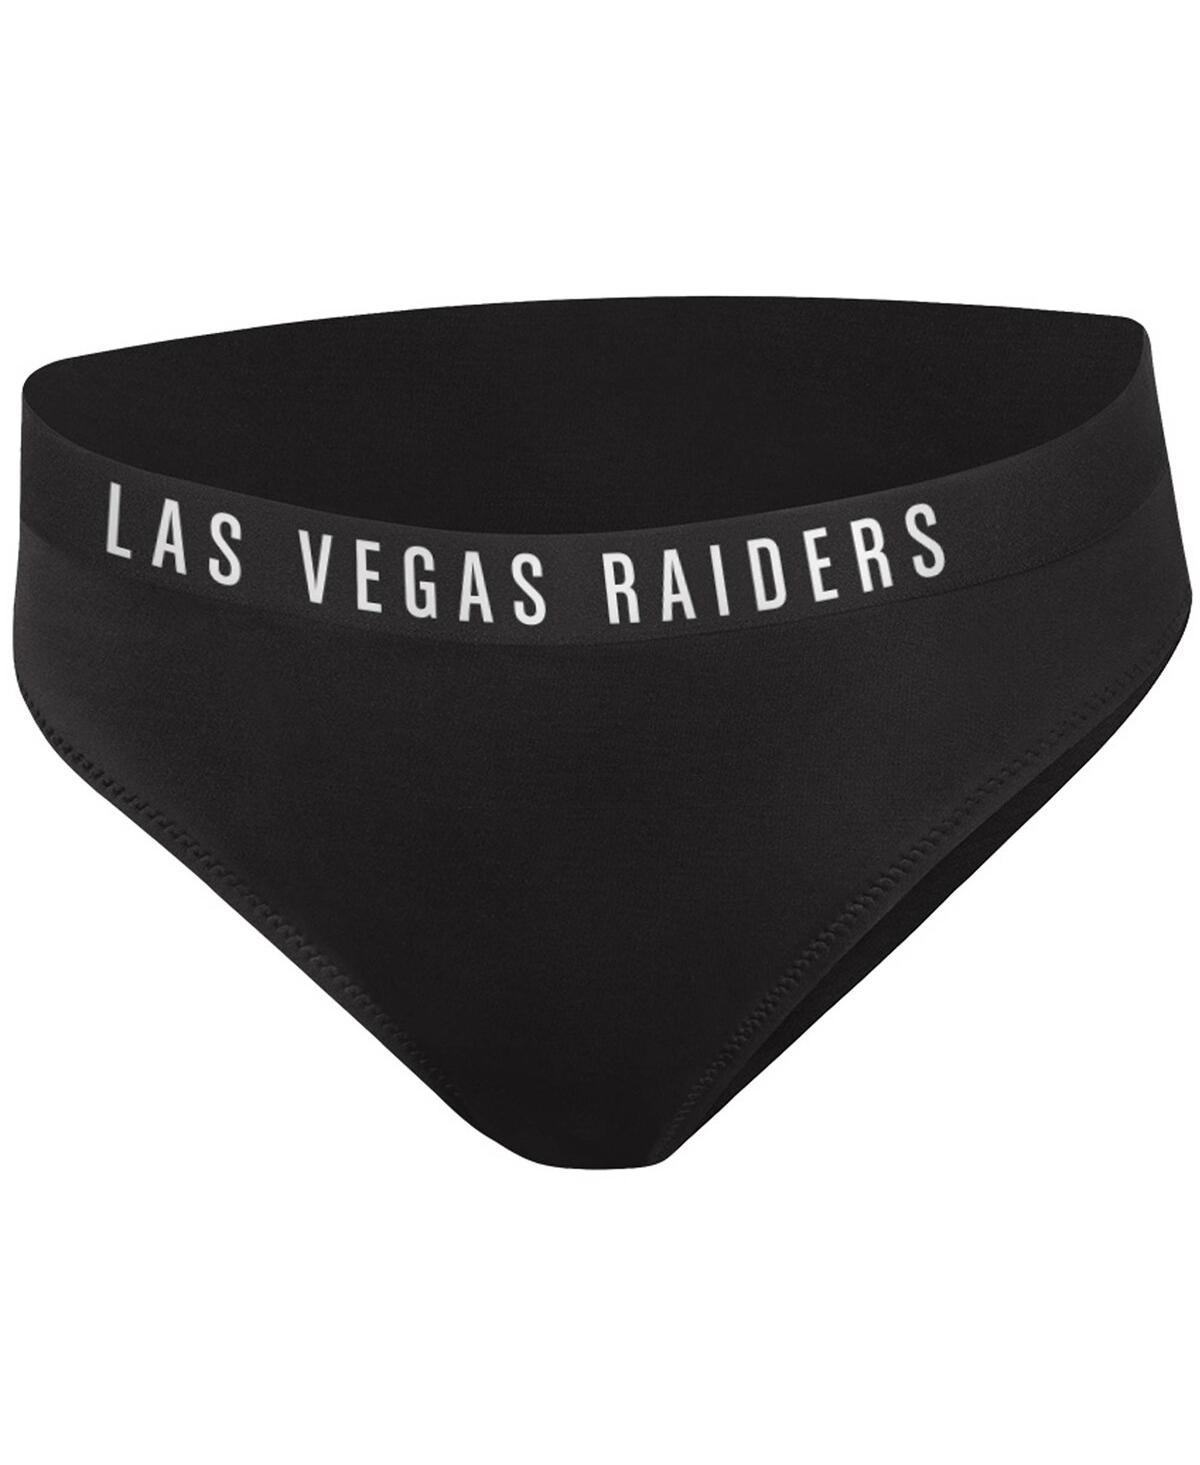 G-iii 4her By Carl Banks Women's  Black Las Vegas Raiders All-star Bikini Bottom